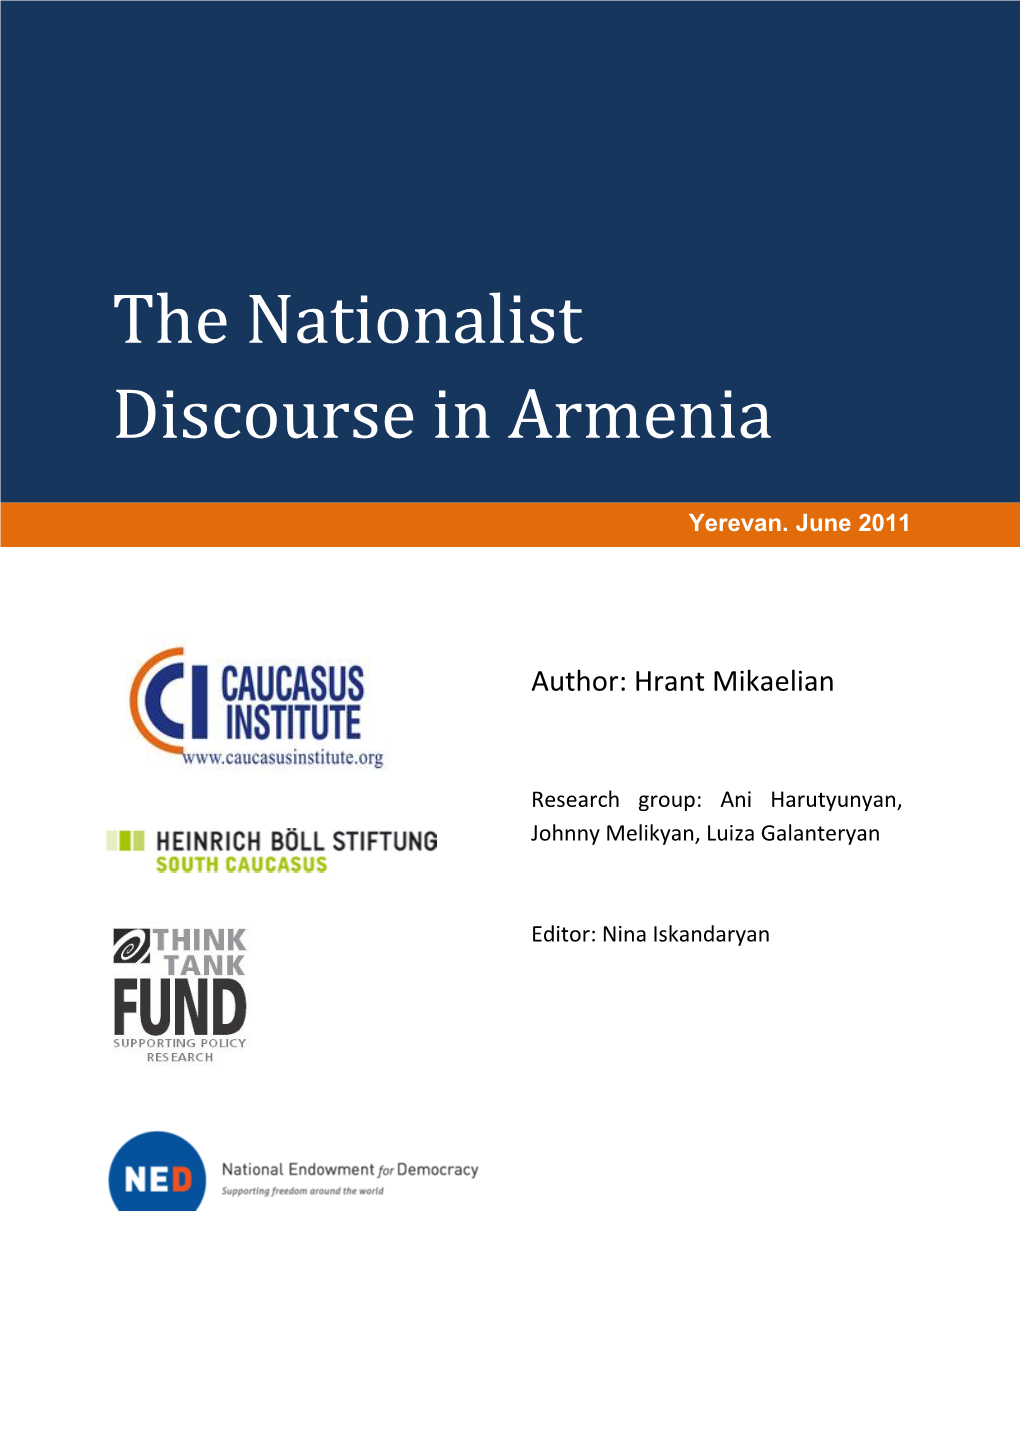 The Nationalist Discourse in Armenia